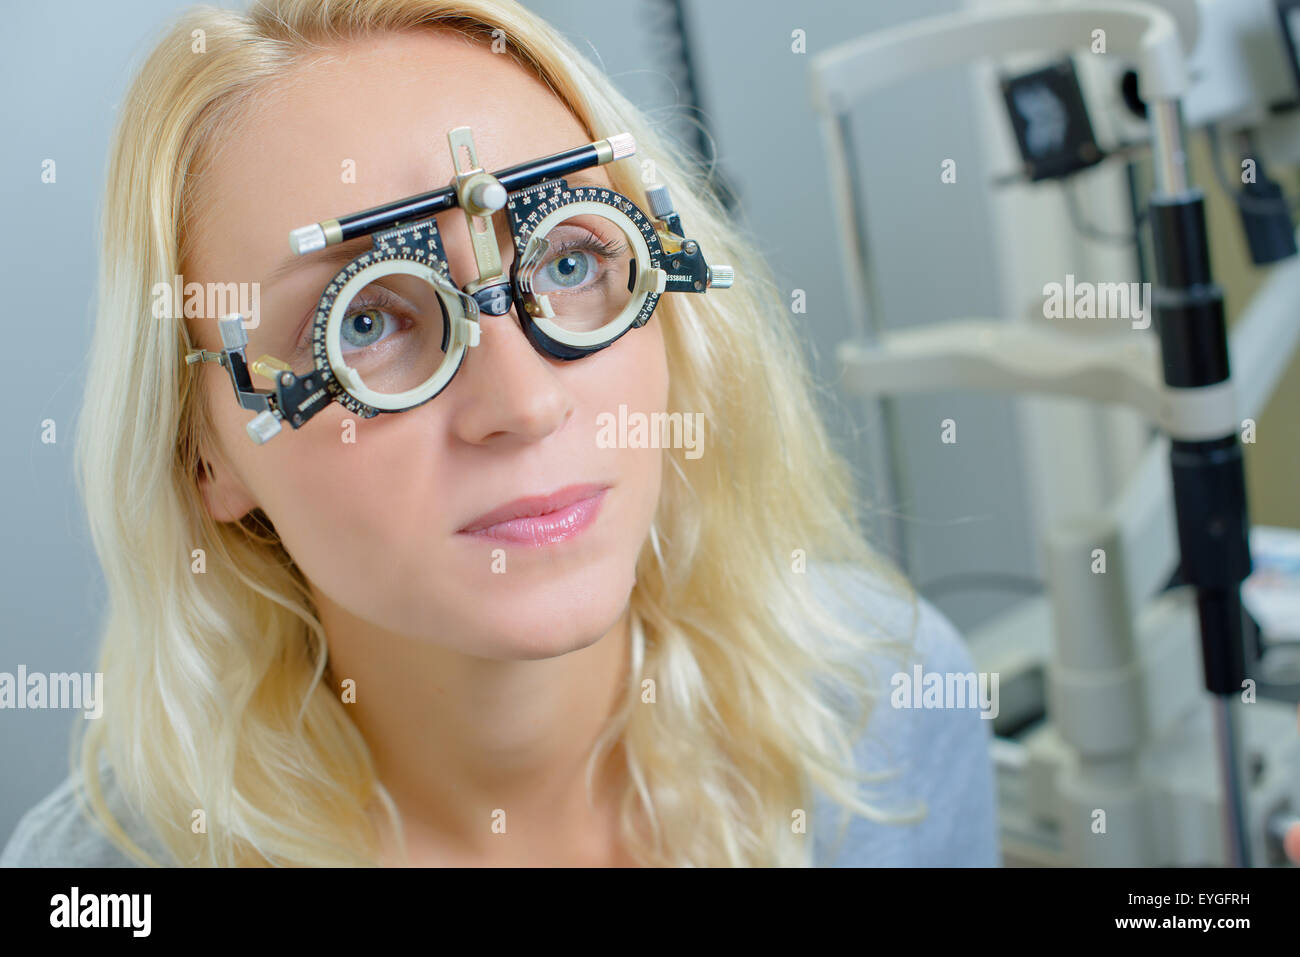 Lady wearing opticians testing glasses Stock Photo